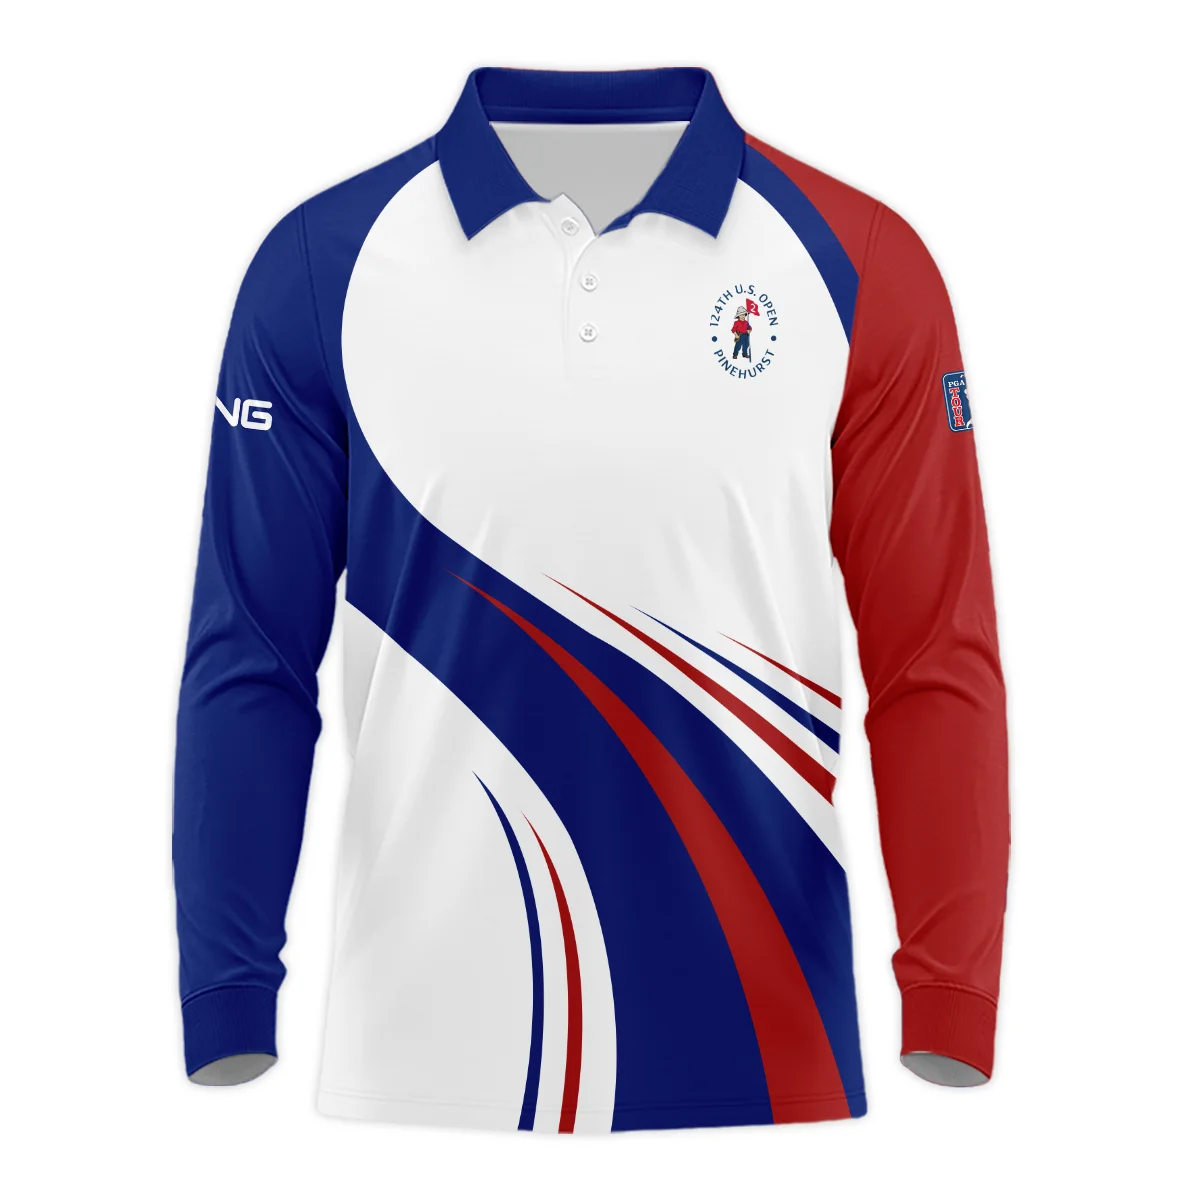 Ping 124th U.S. Open Pinehurst Golf Blue Red White Background Zipper Polo Shirt Style Classic Zipper Polo Shirt For Men